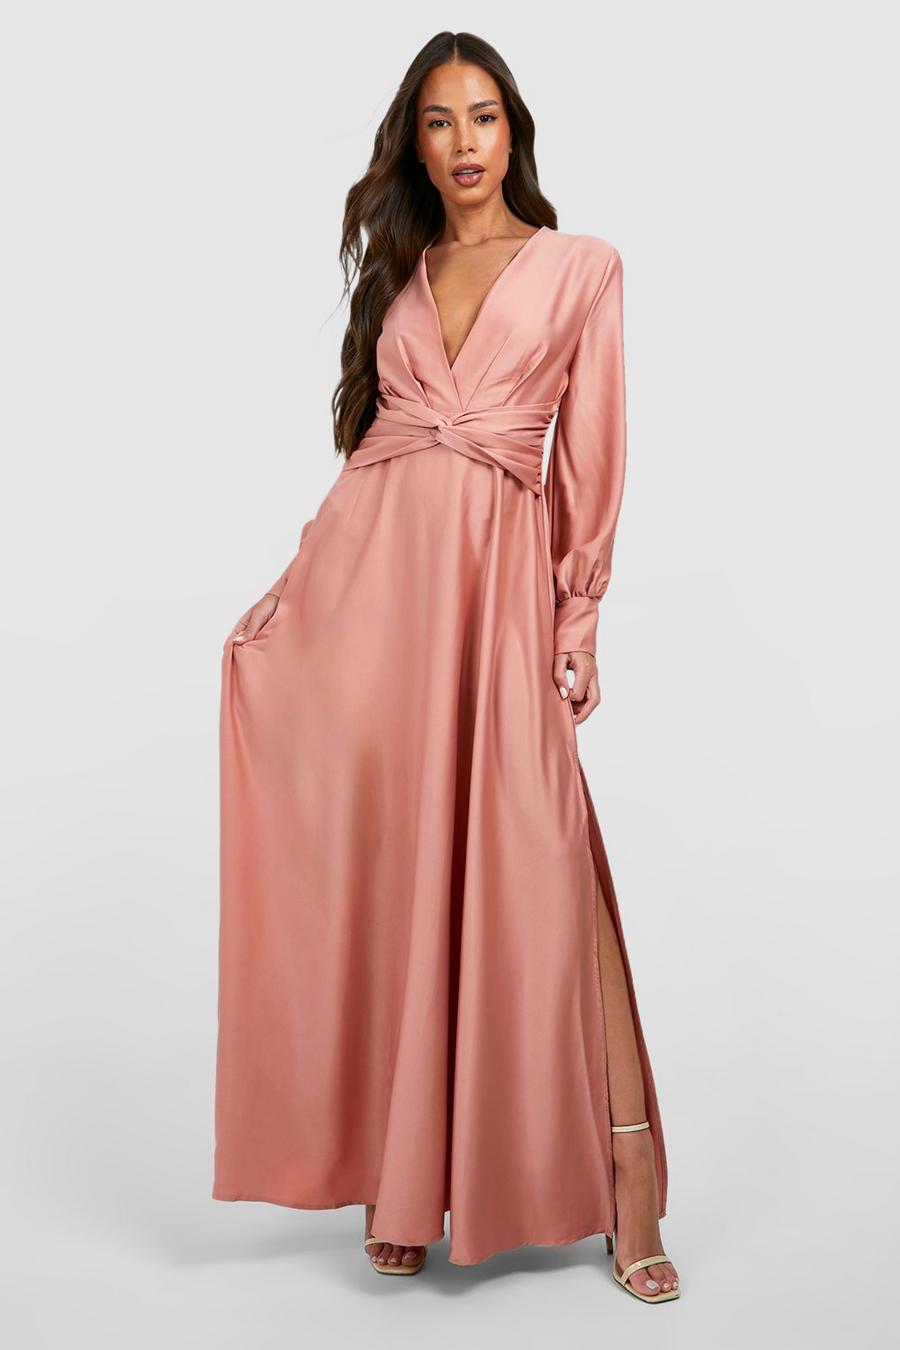 Pink rose Satin Twist Front Maxi Bridesmaid Dress